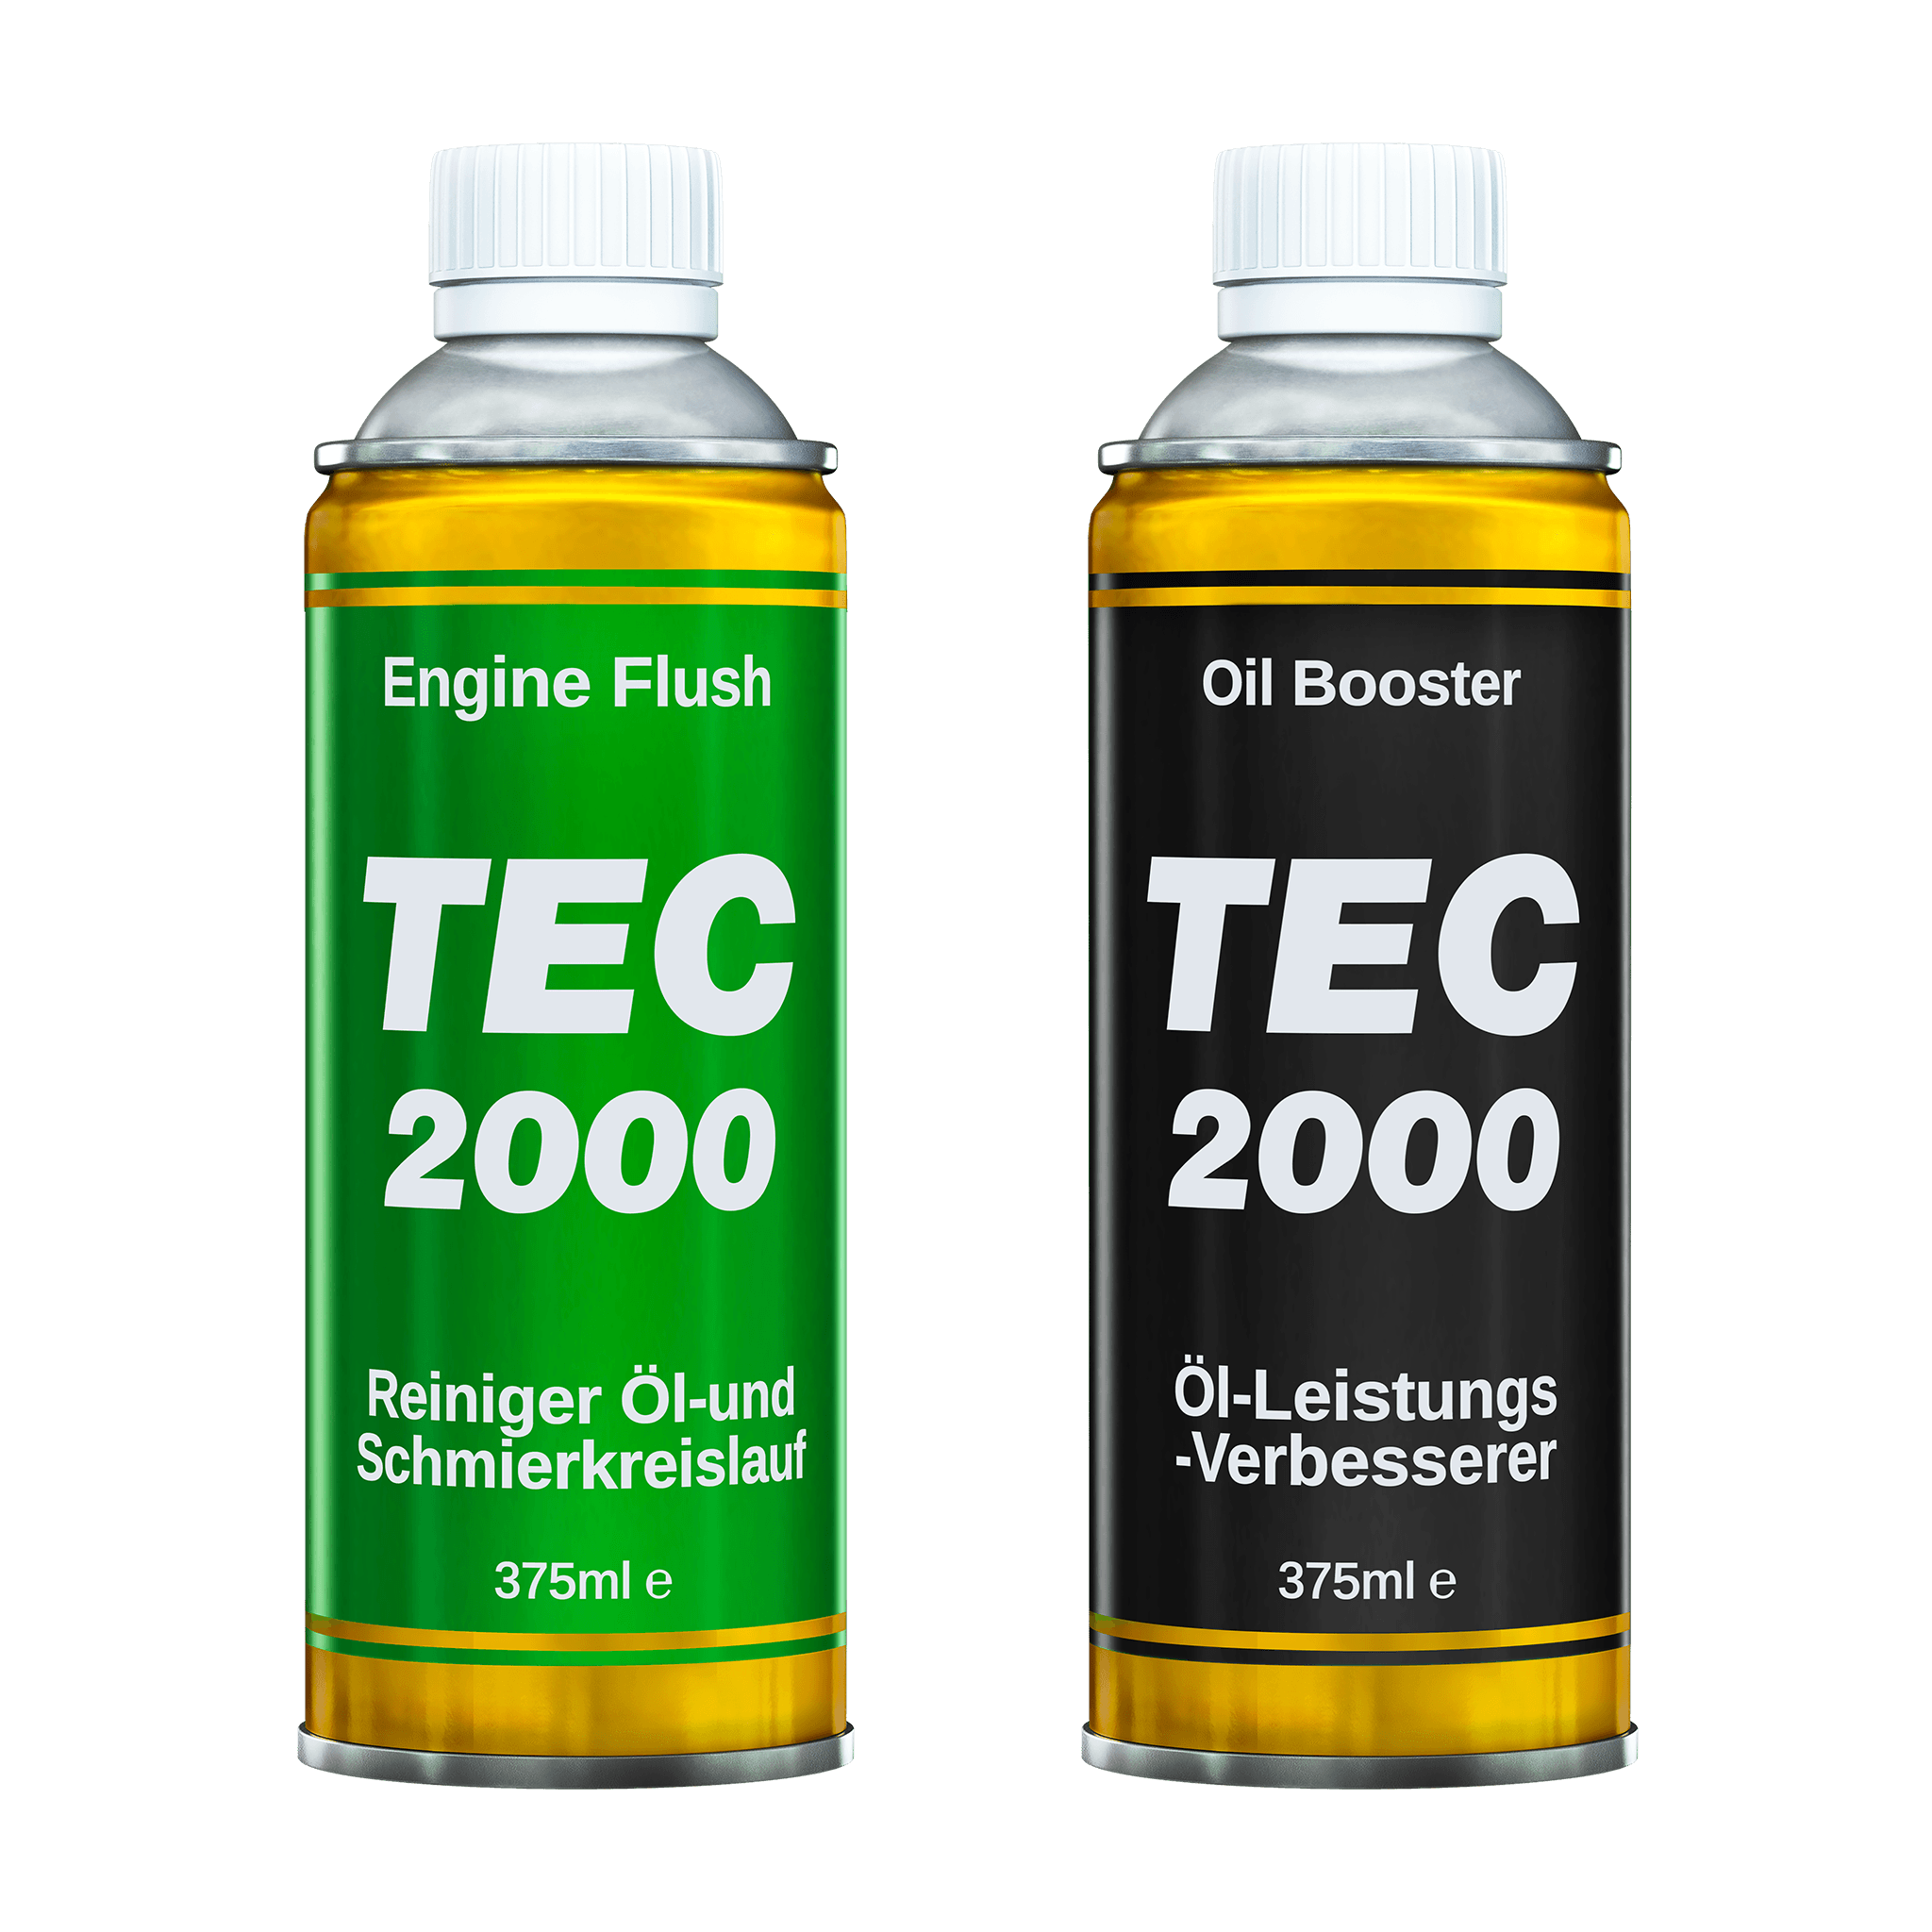 TEC 2000 Engine Flush i Oil Booster